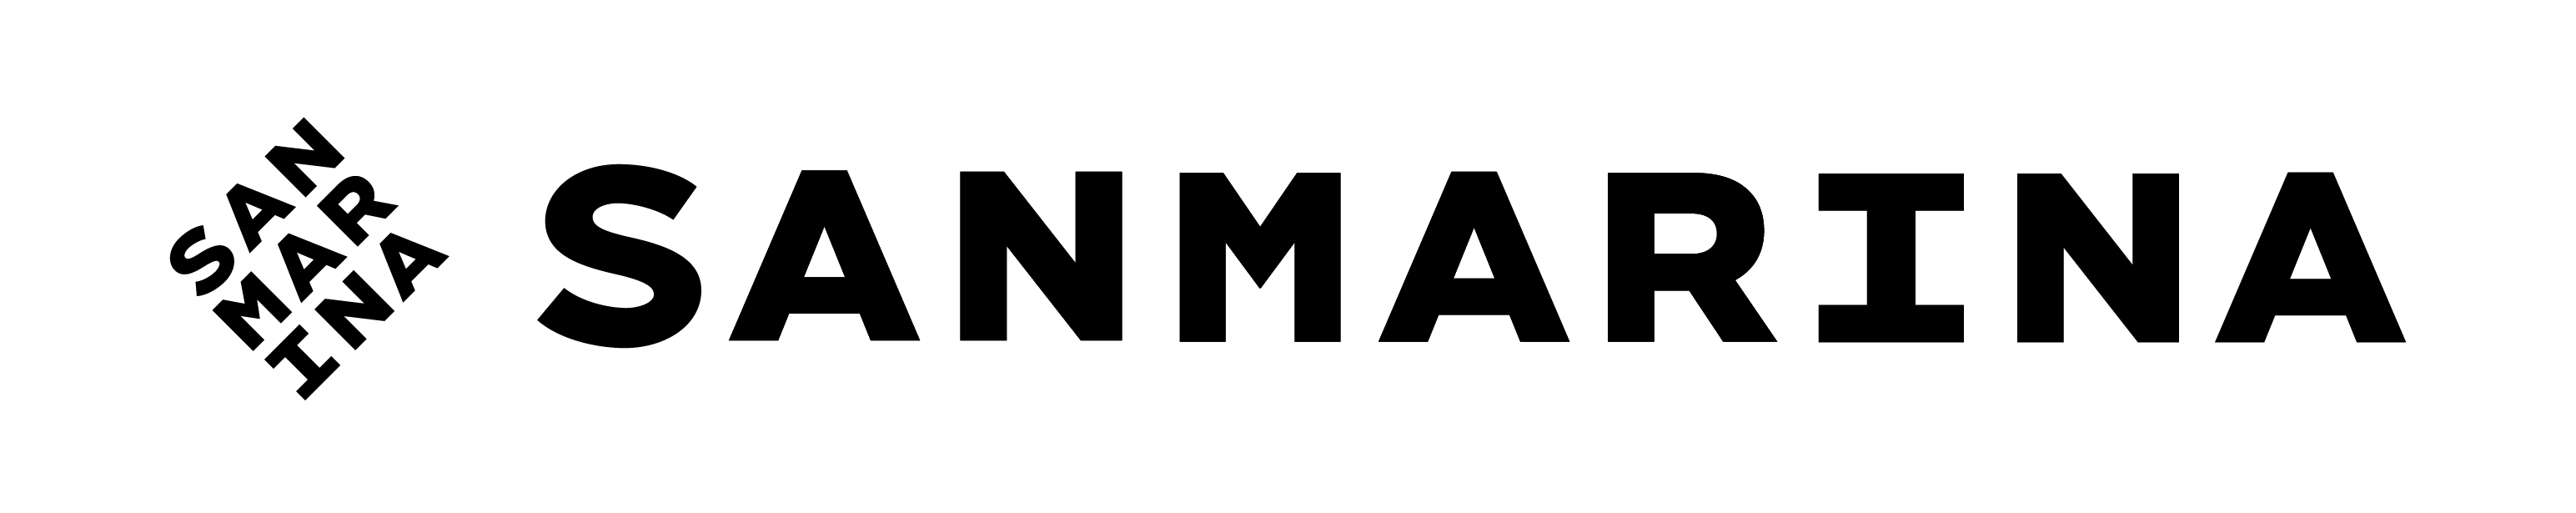 SAN MARINA logo horizontal